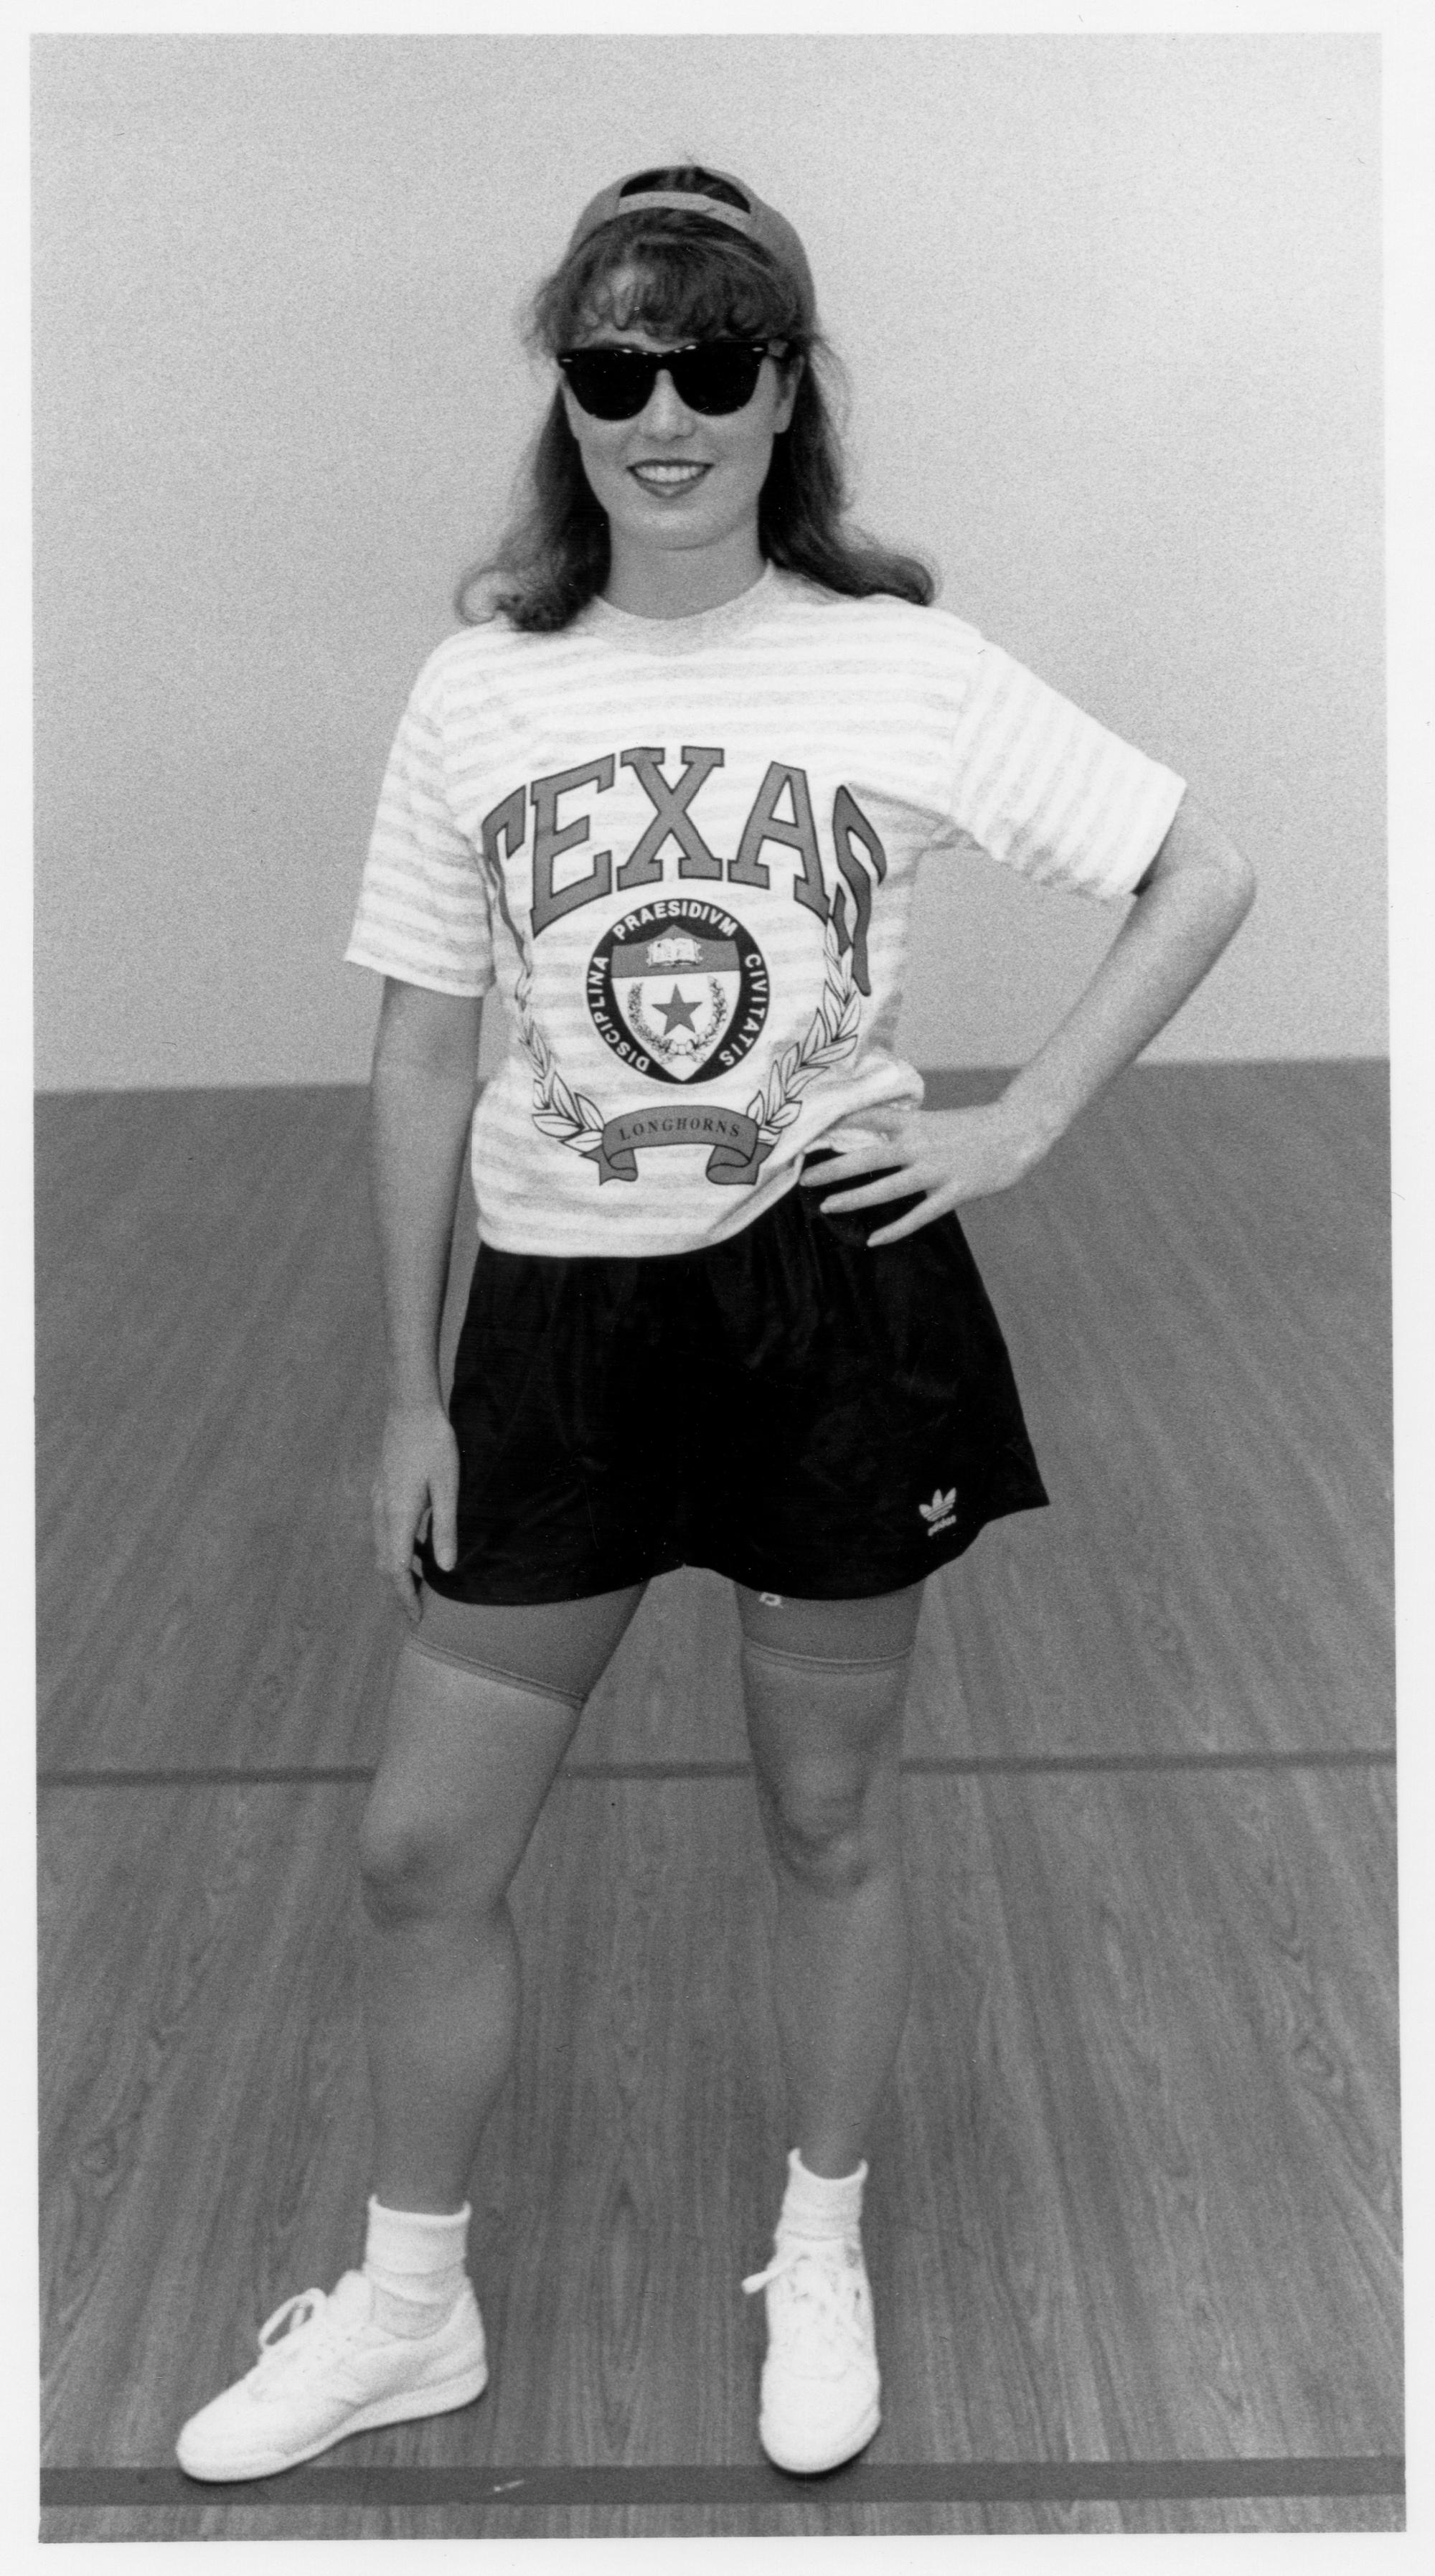 Daily Texan (1991-1992) - Sorority Clothing #2